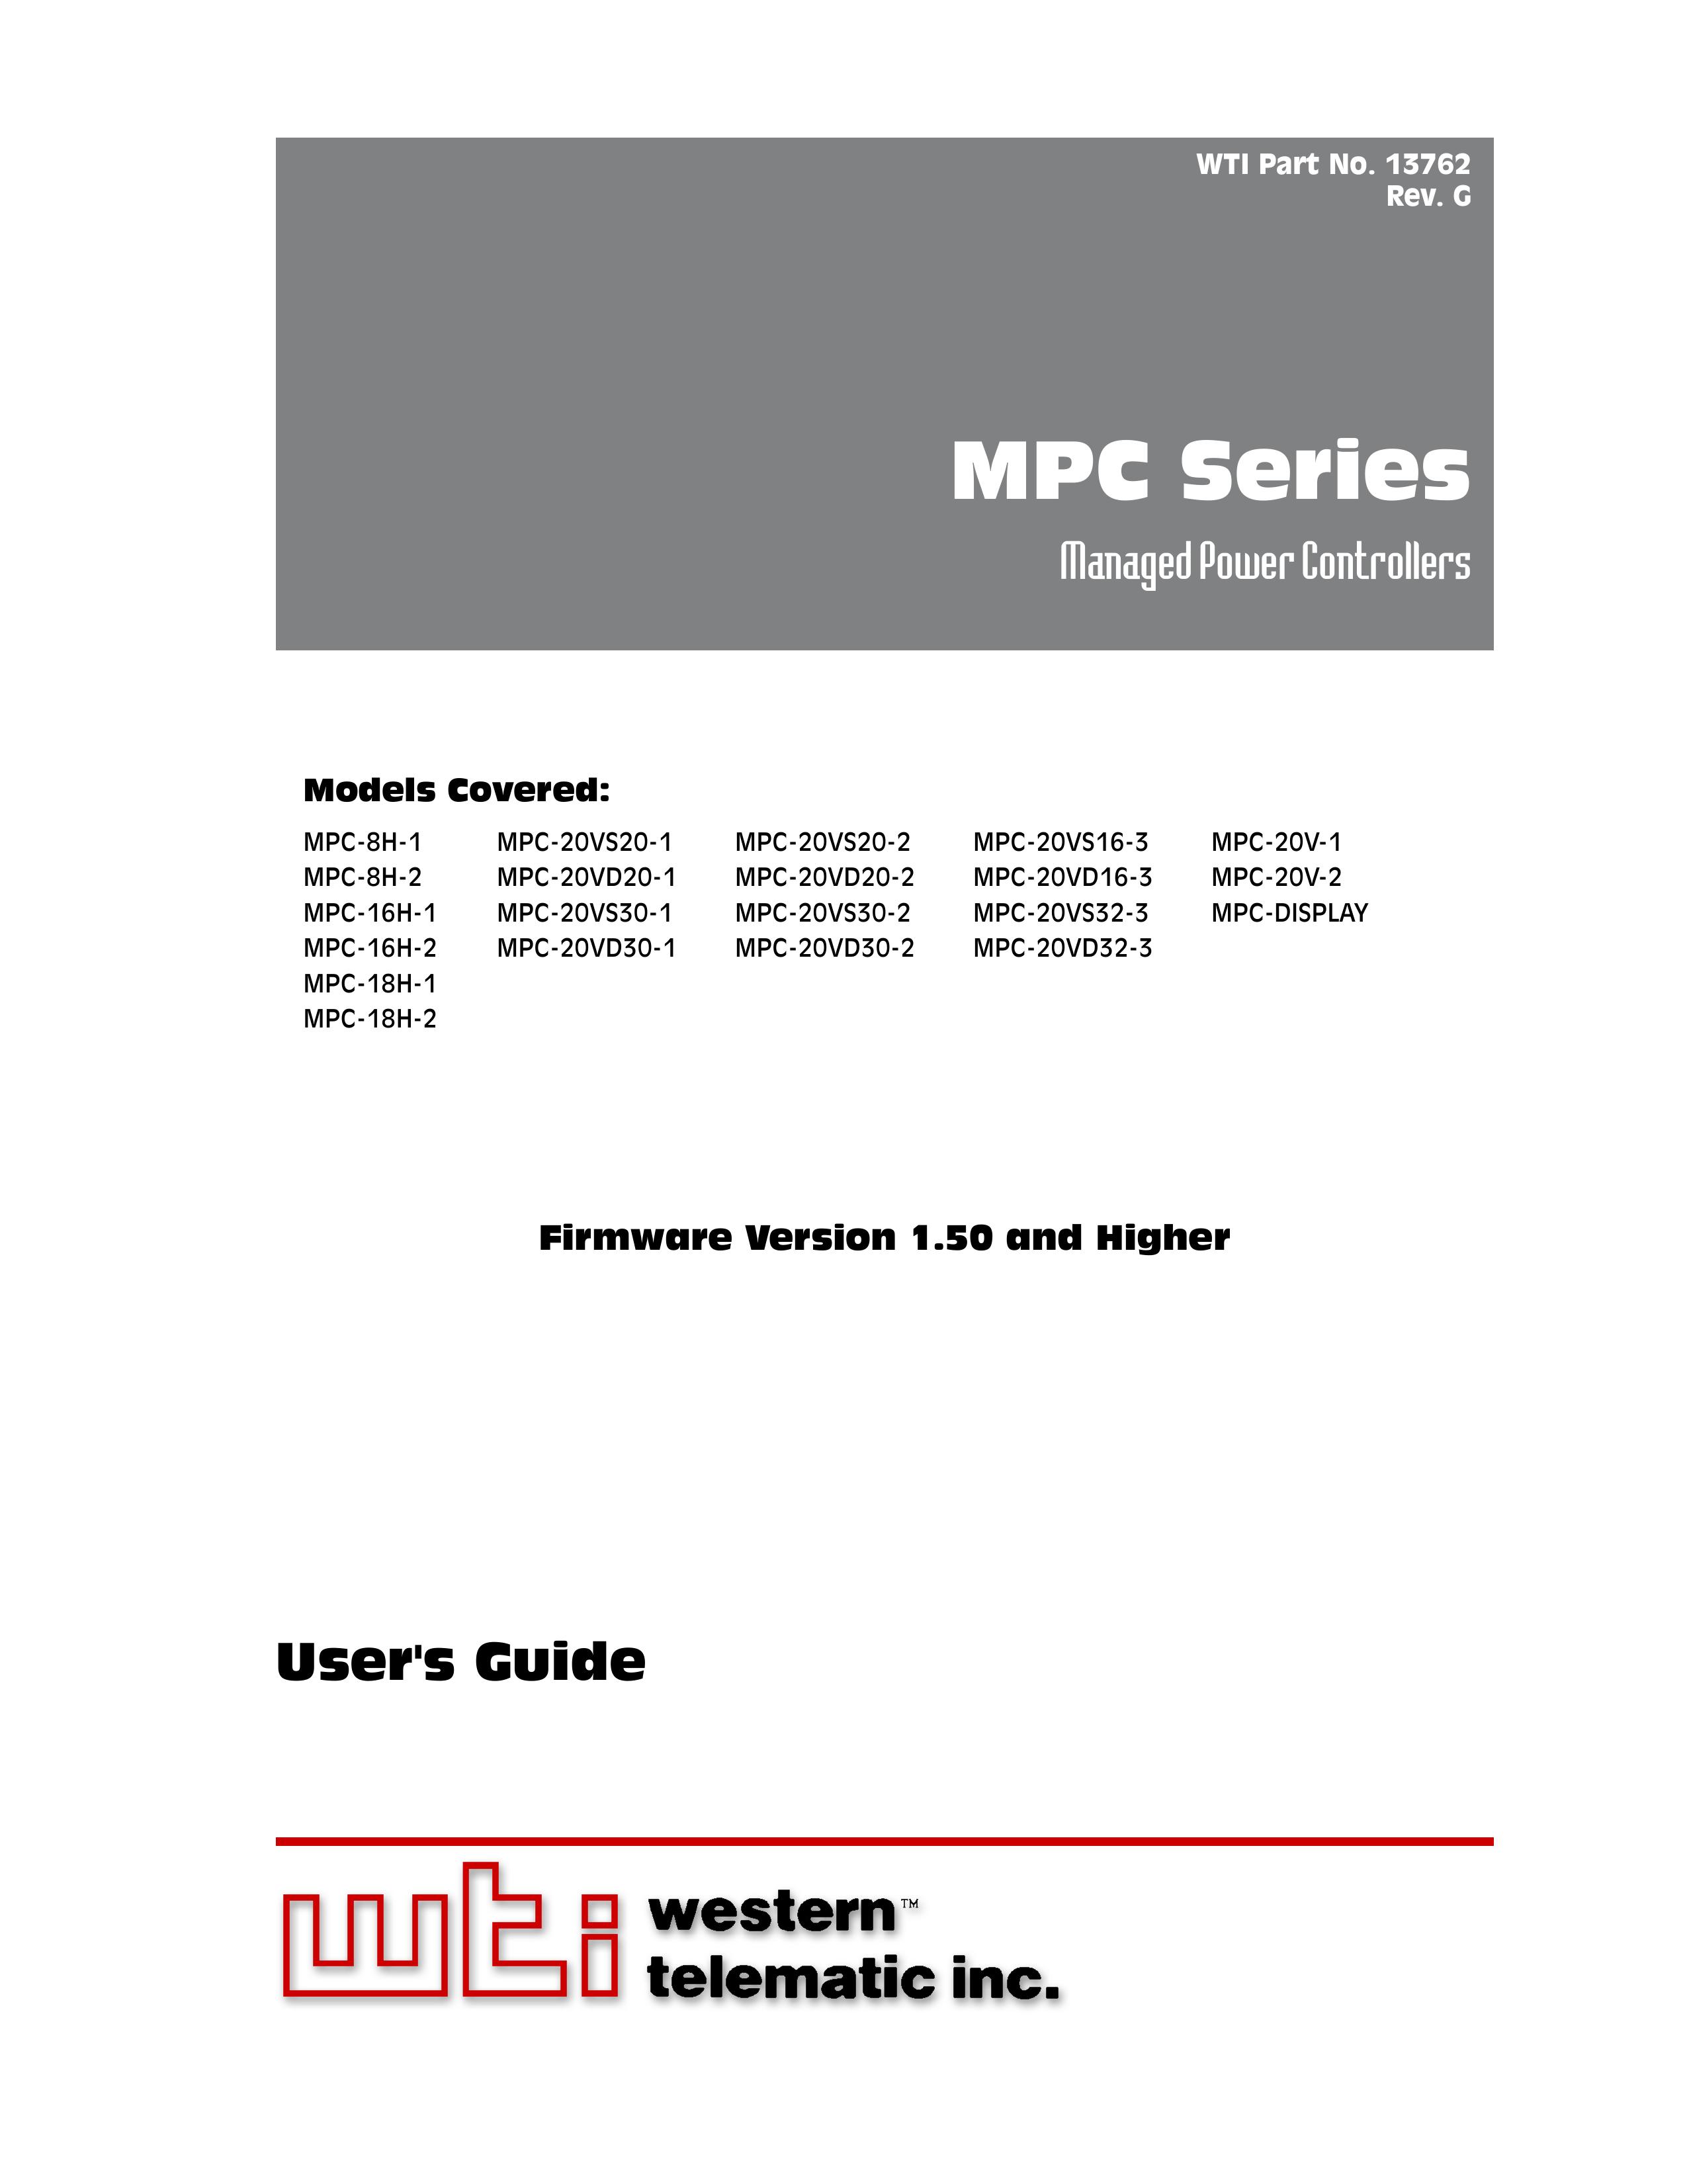 Western Telematic MPC-20VS16-3 Yard Vacuum User Manual